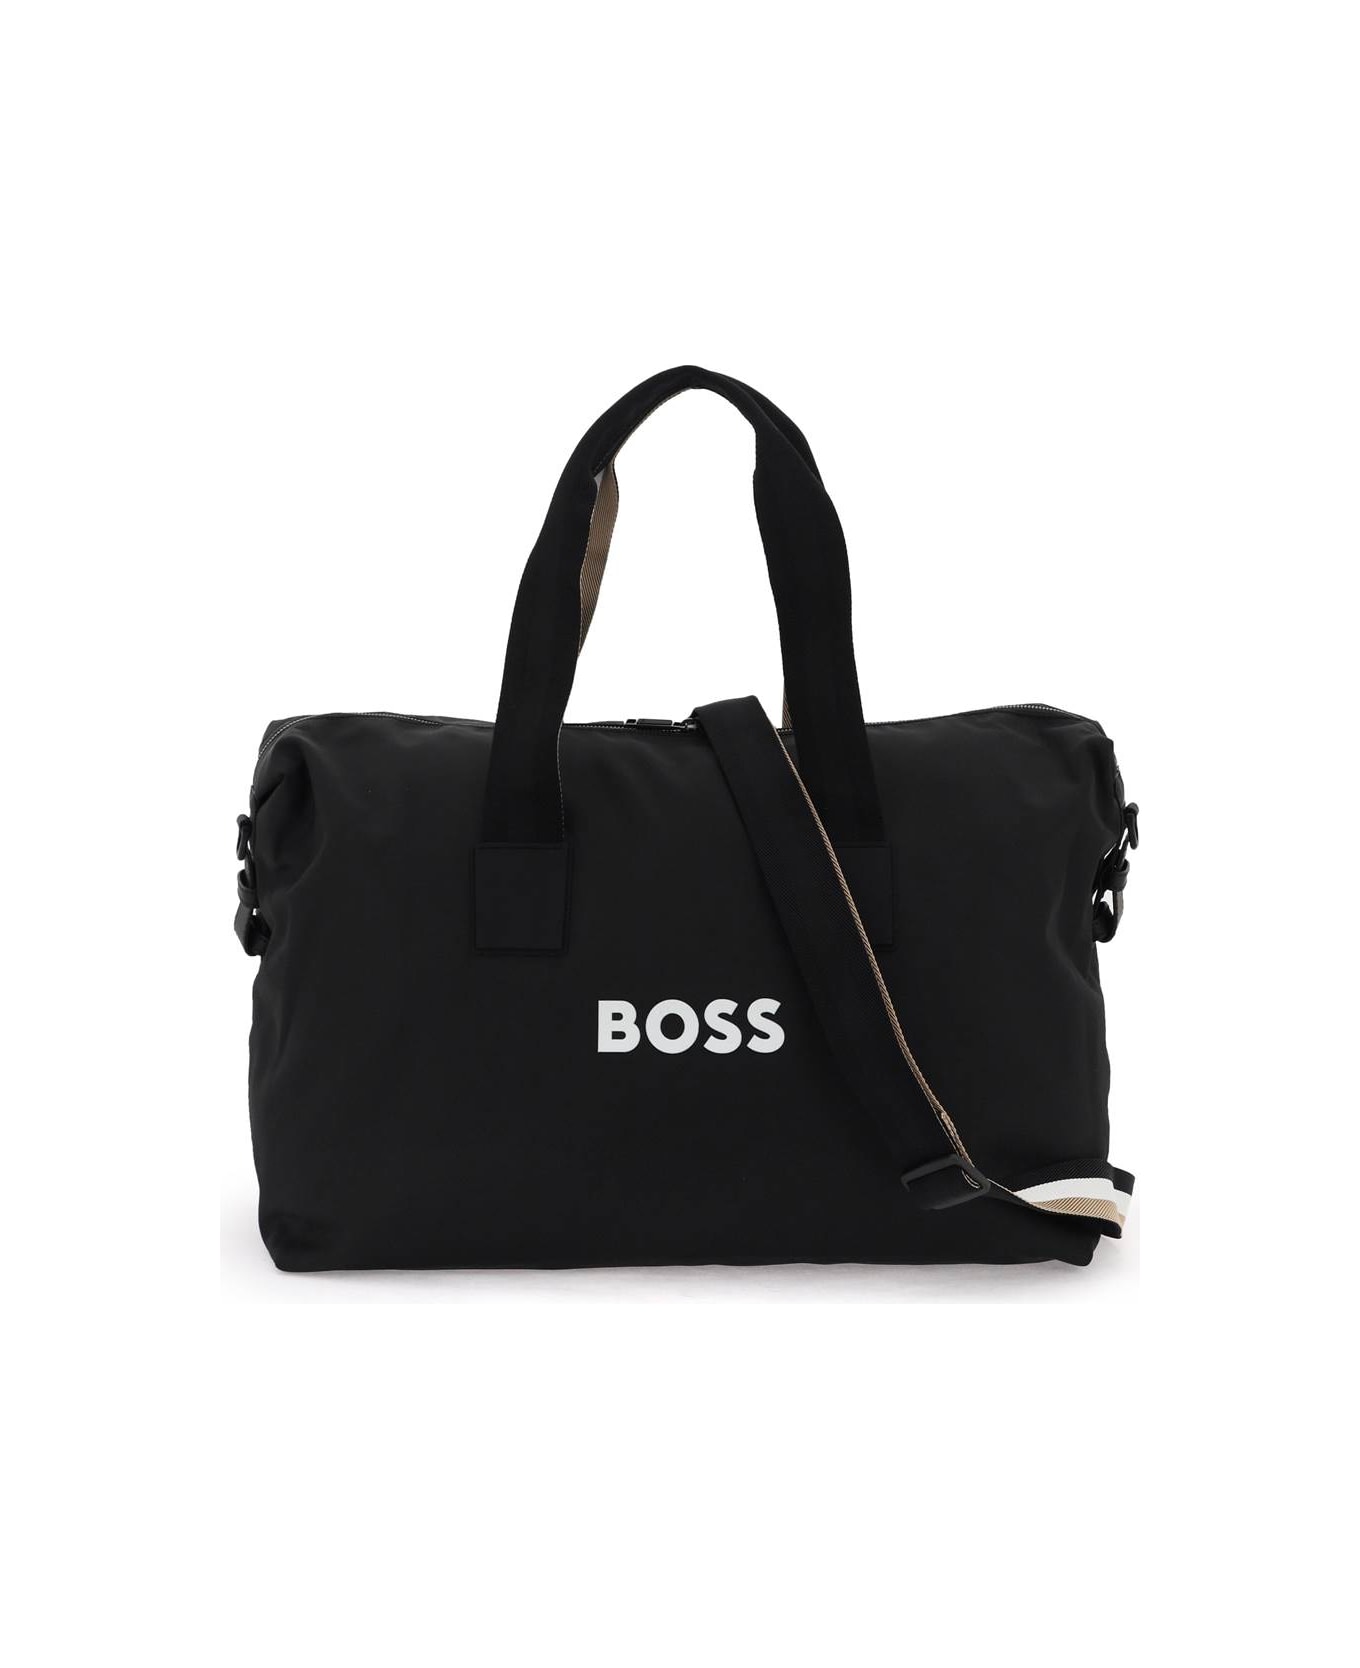 Hugo Boss Rubberized Logo Duffle Bag - Black